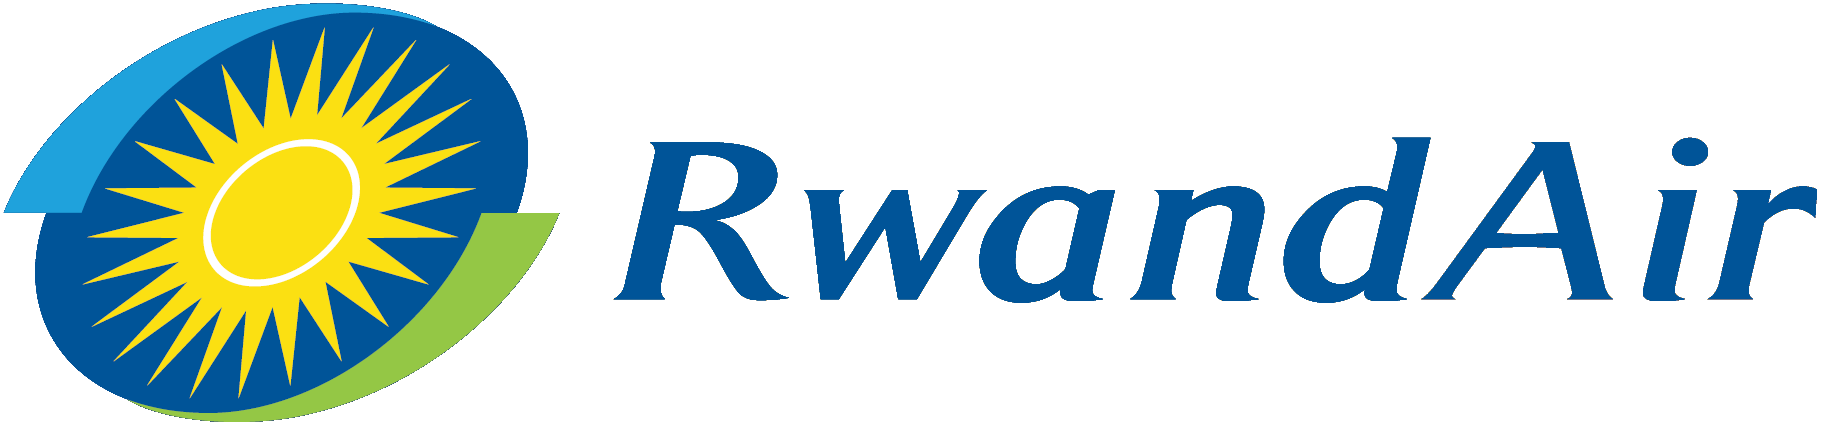 Rwandair Logo - File:RwandAir Logotype.png - Wikimedia Commons